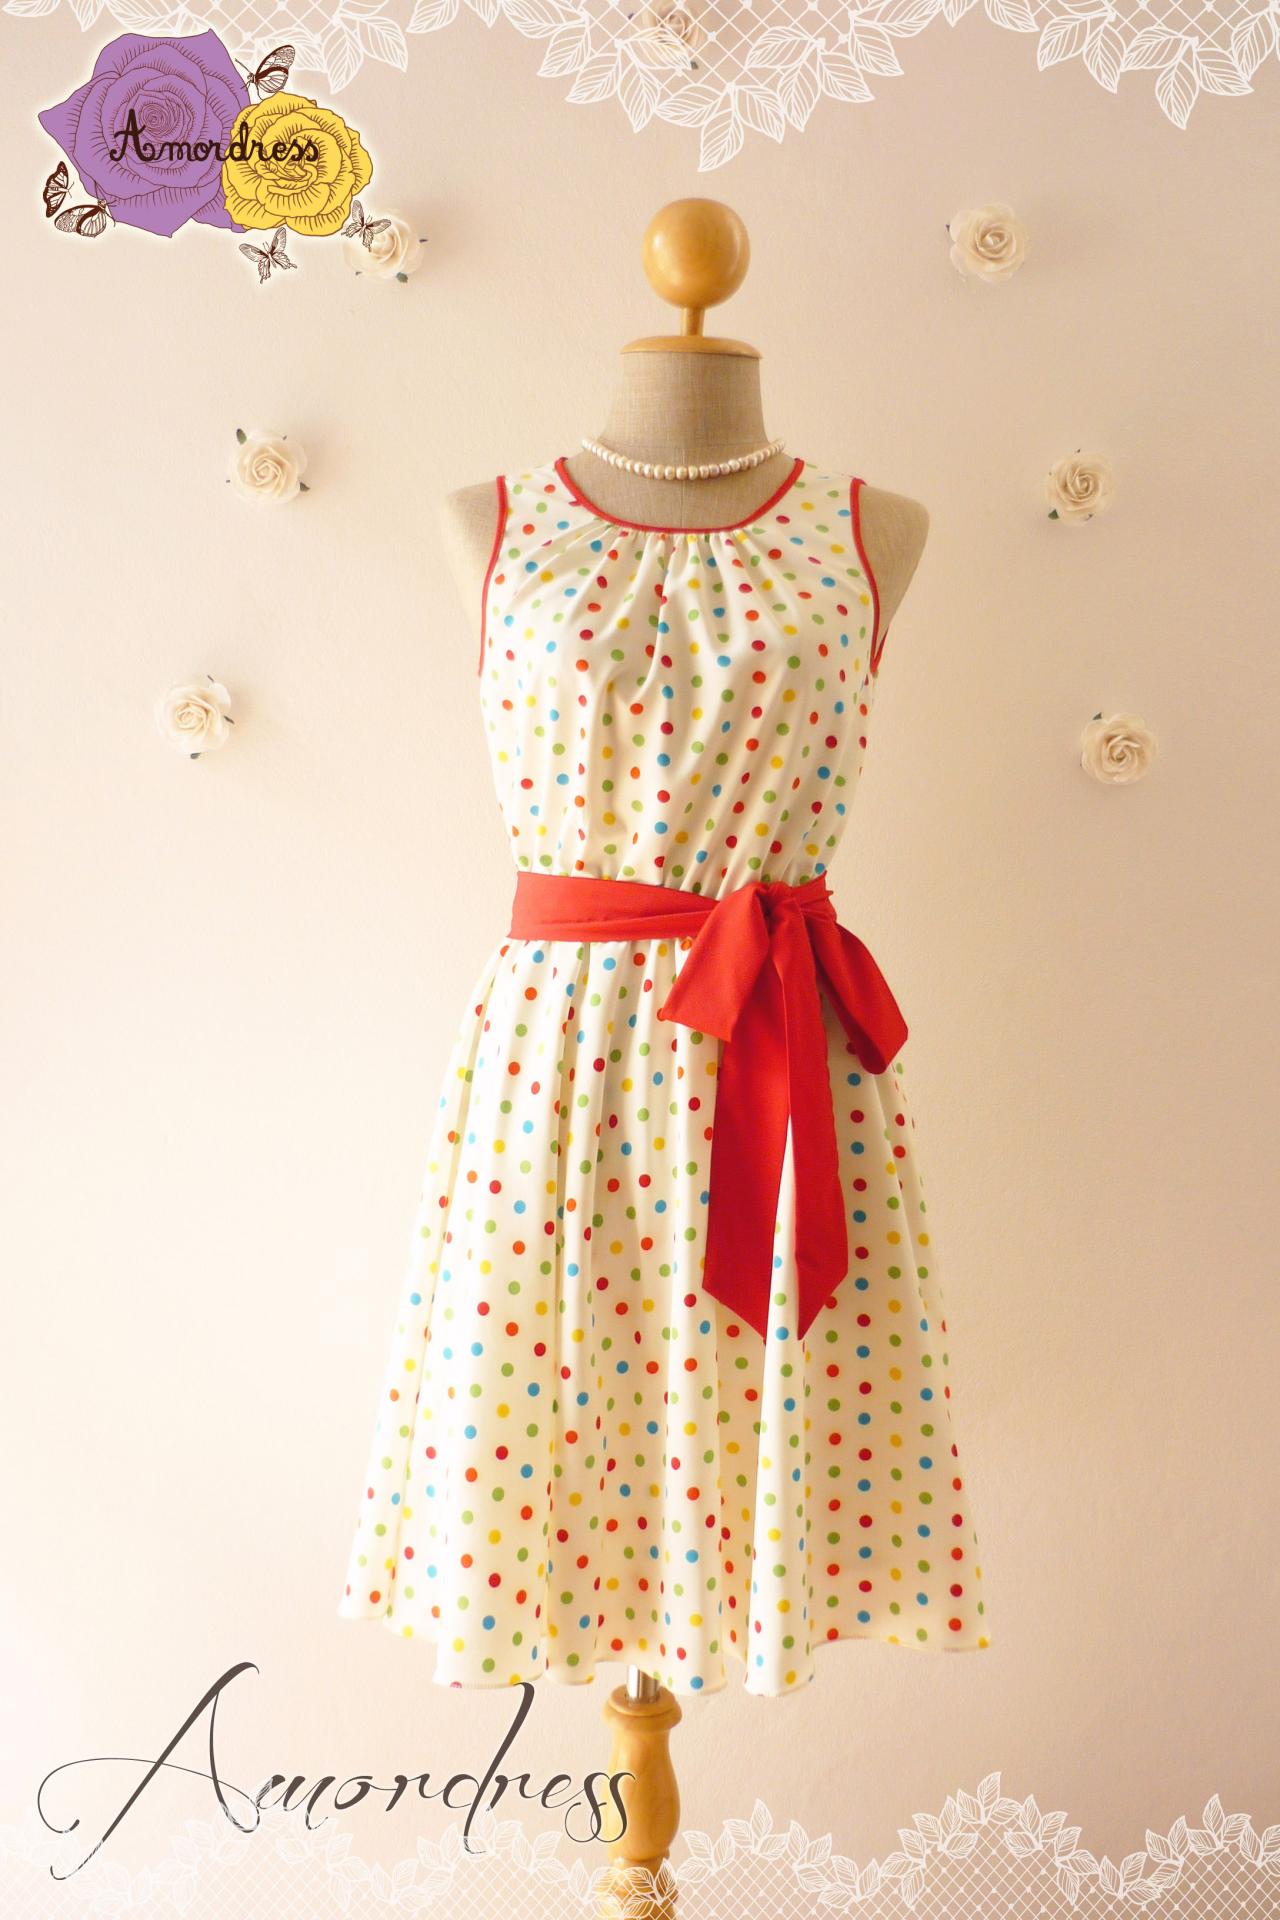 Party Dress Polka Dot Dress Vintage Inspired Dress Swing Dress -Size XS,S,M,L,XL